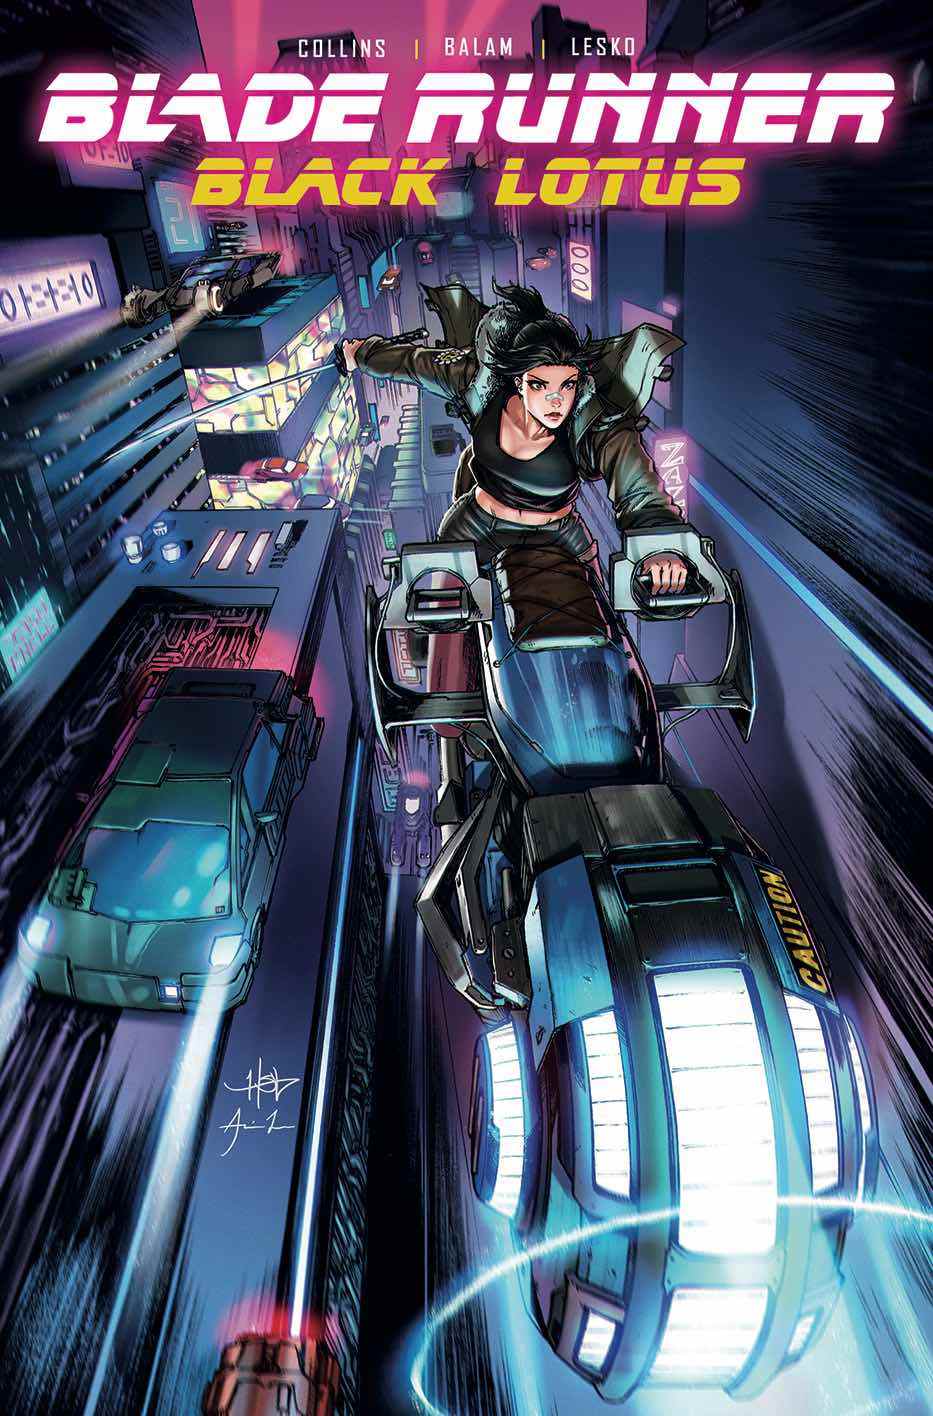 Blade Runner: couverture de la variante Black Lotus # 1 par Creees Li